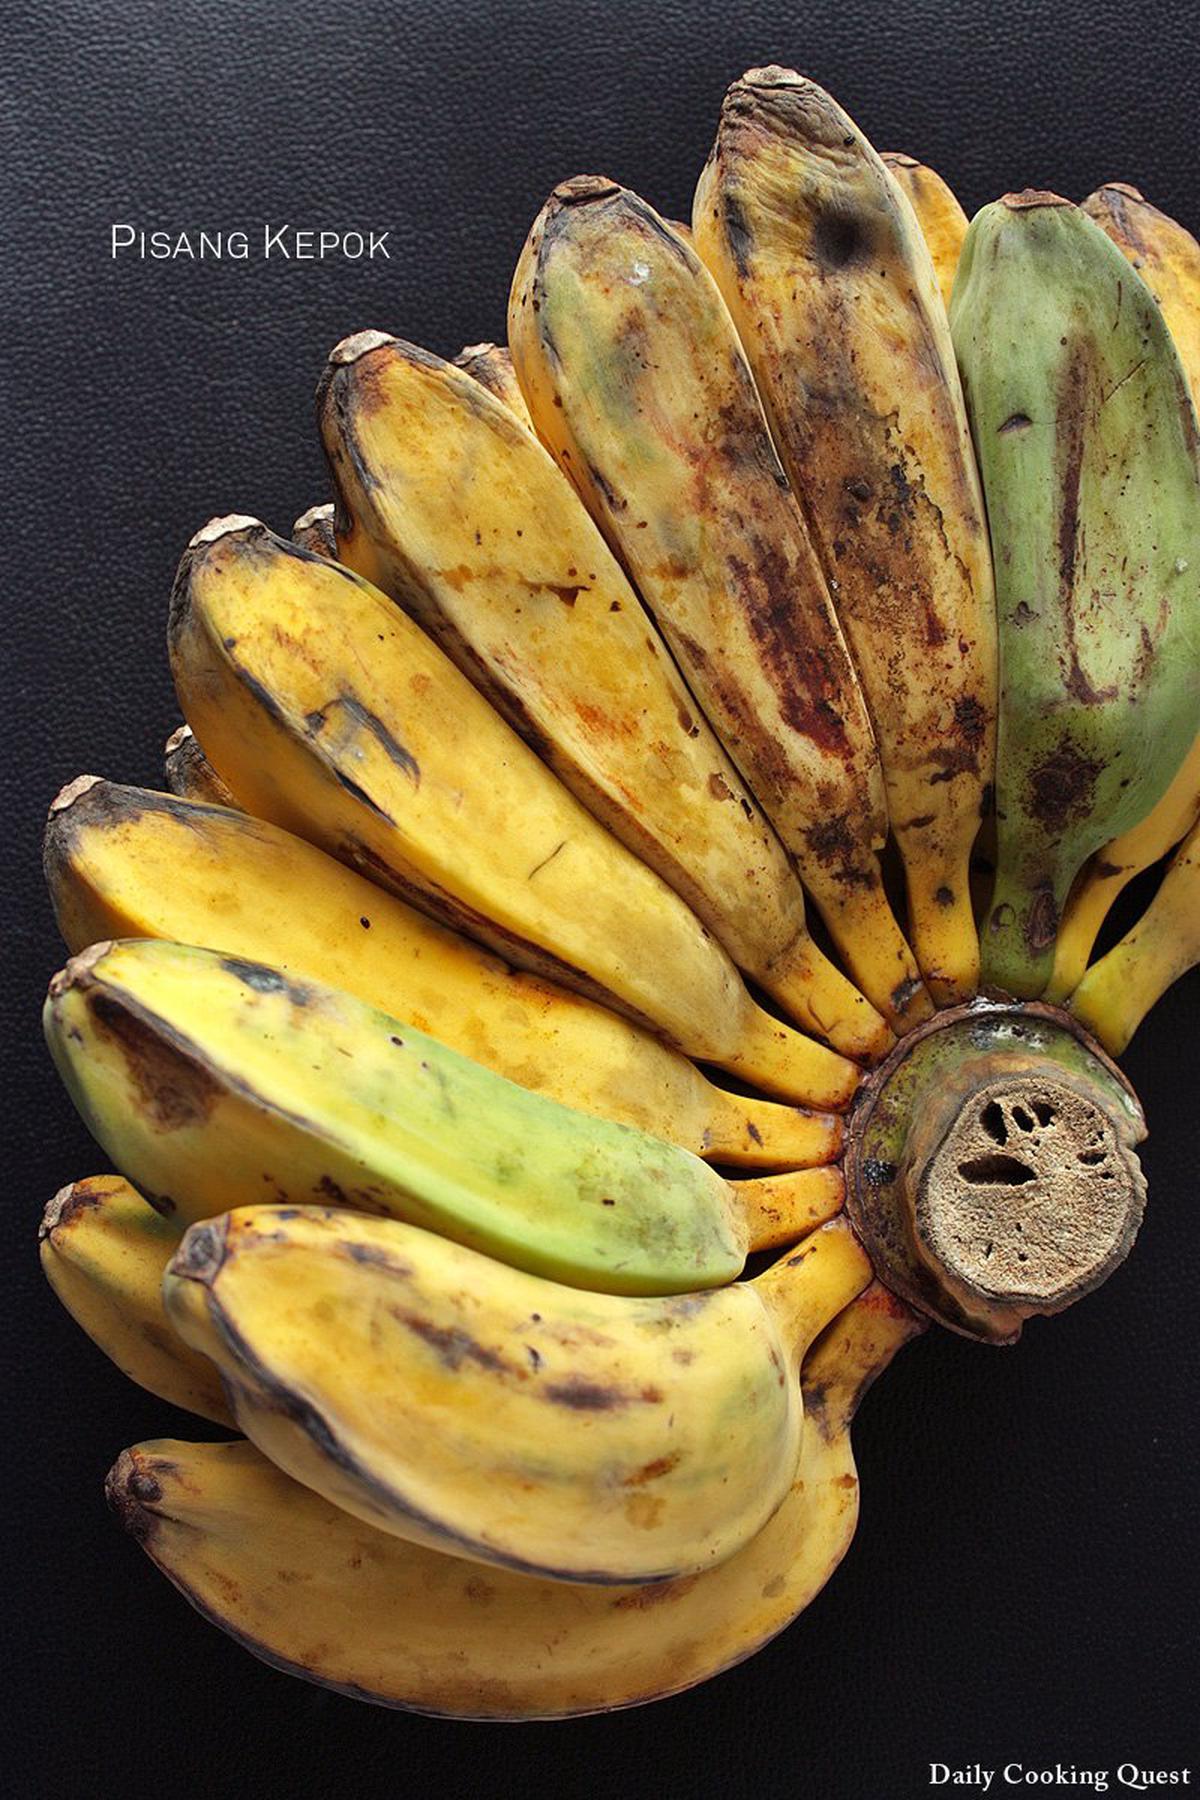 Pisang Kepok - Saba Banana